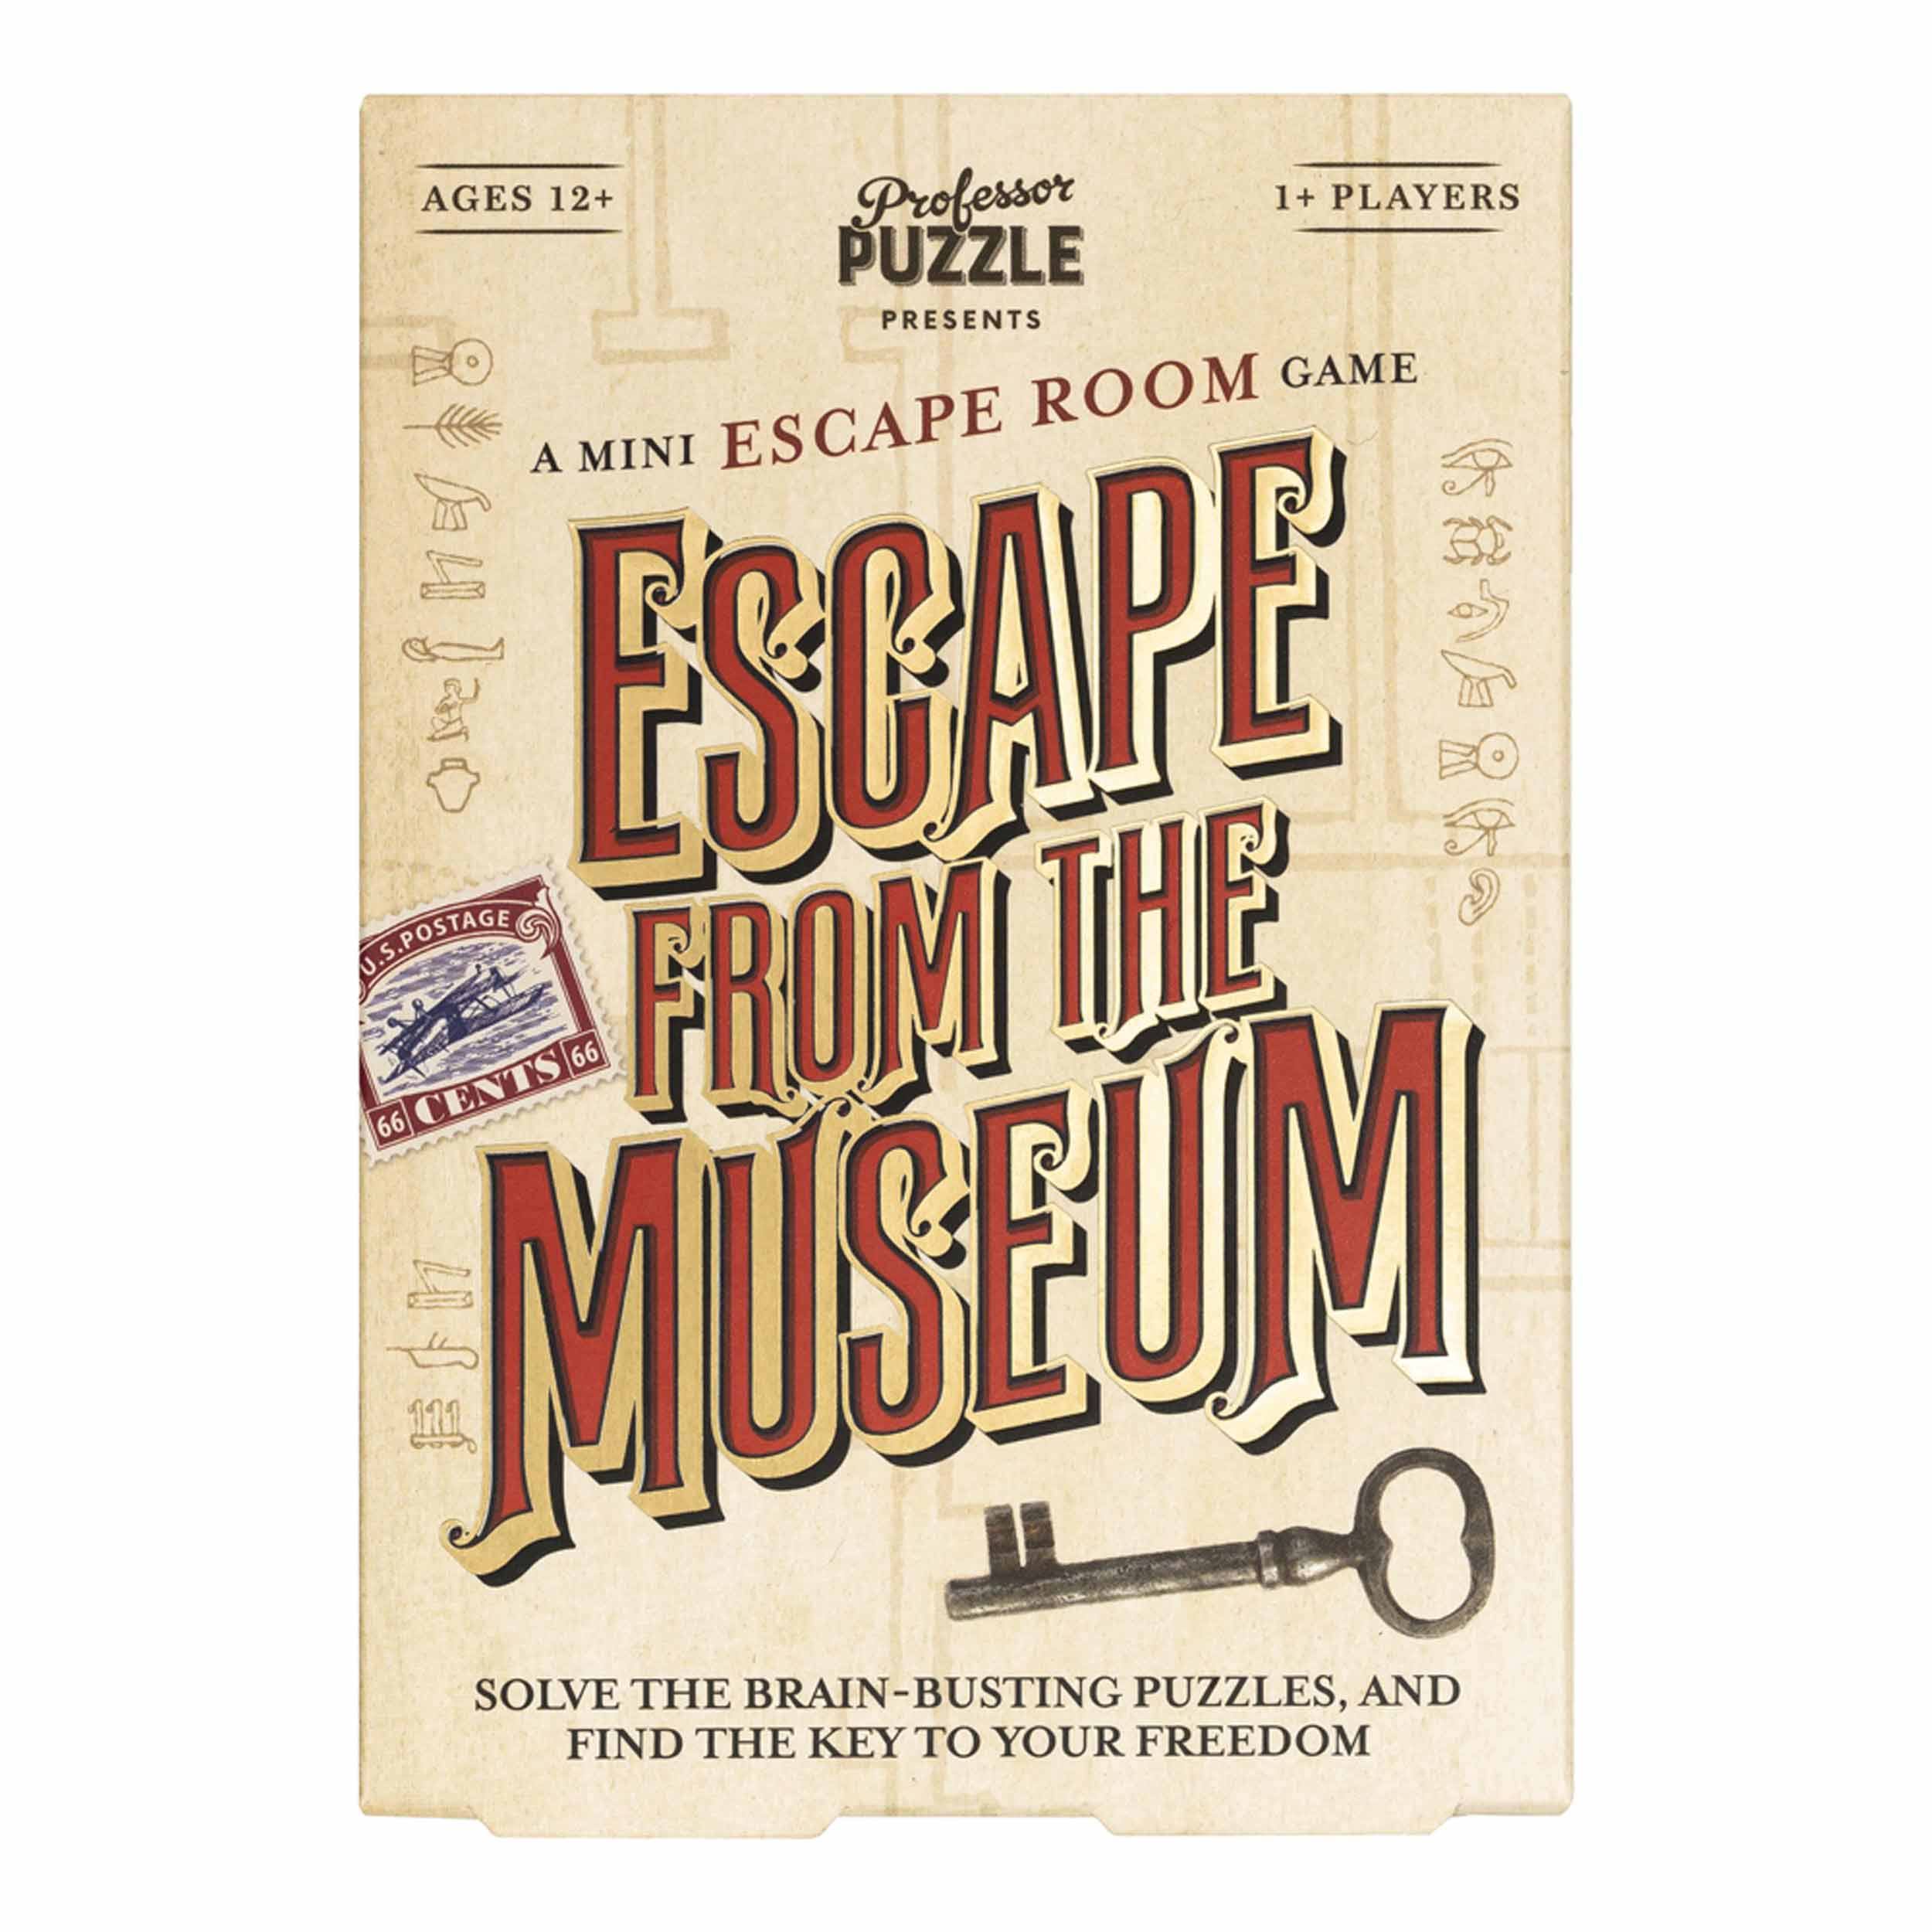 Professor Puzzle USA, Inc. Escape from the museum escape room game